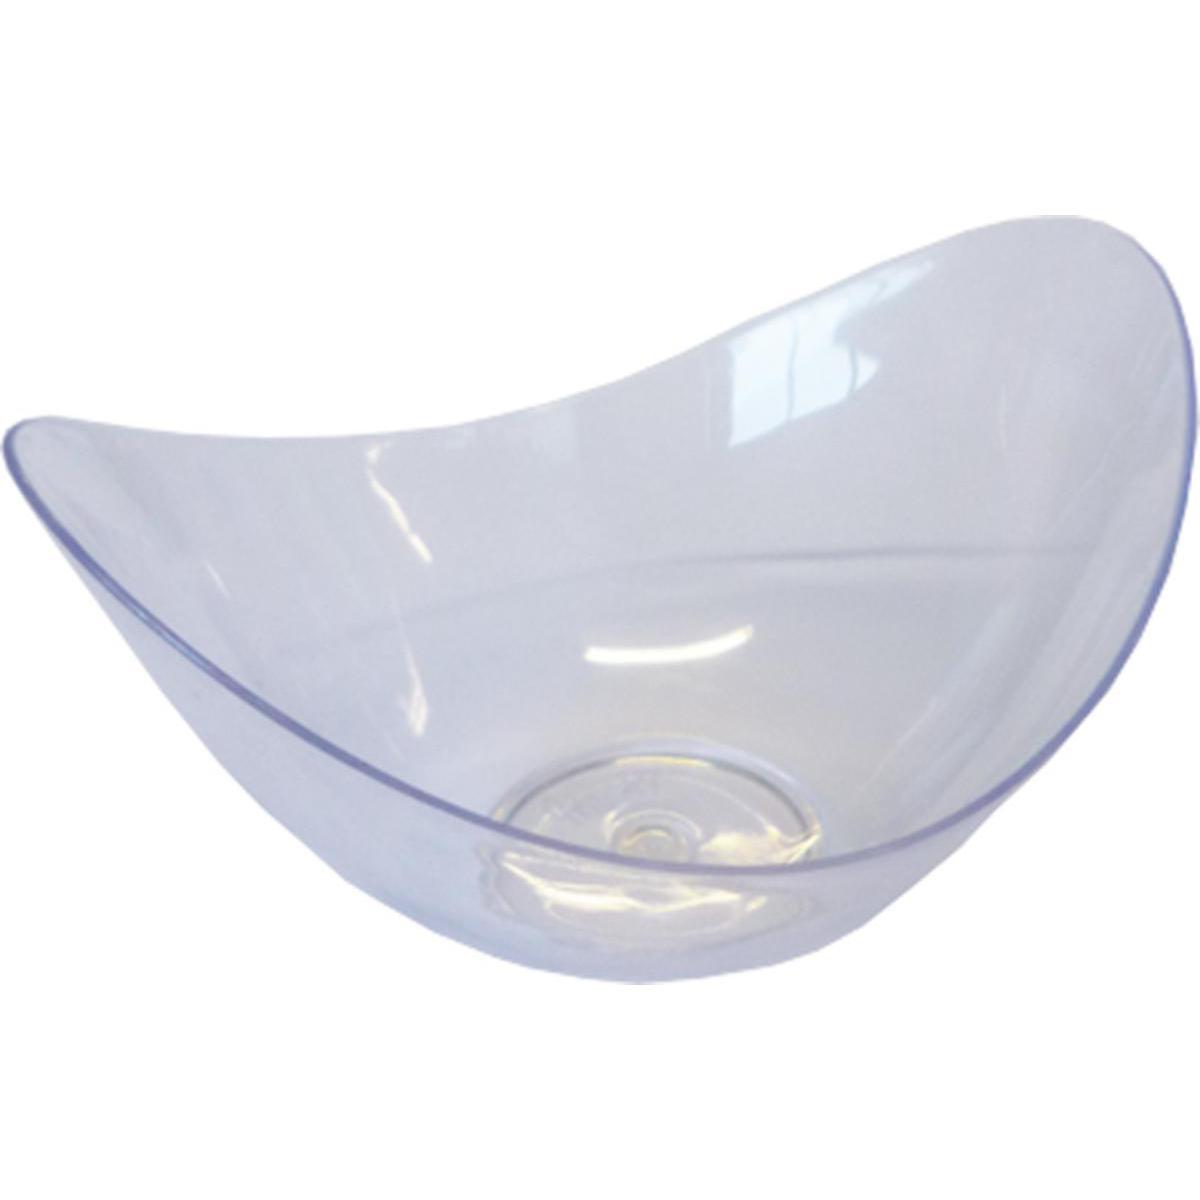 Lot de 16 coupes ovales cristal Gappy prestige - 6 cl -Polystyrène- Blanc